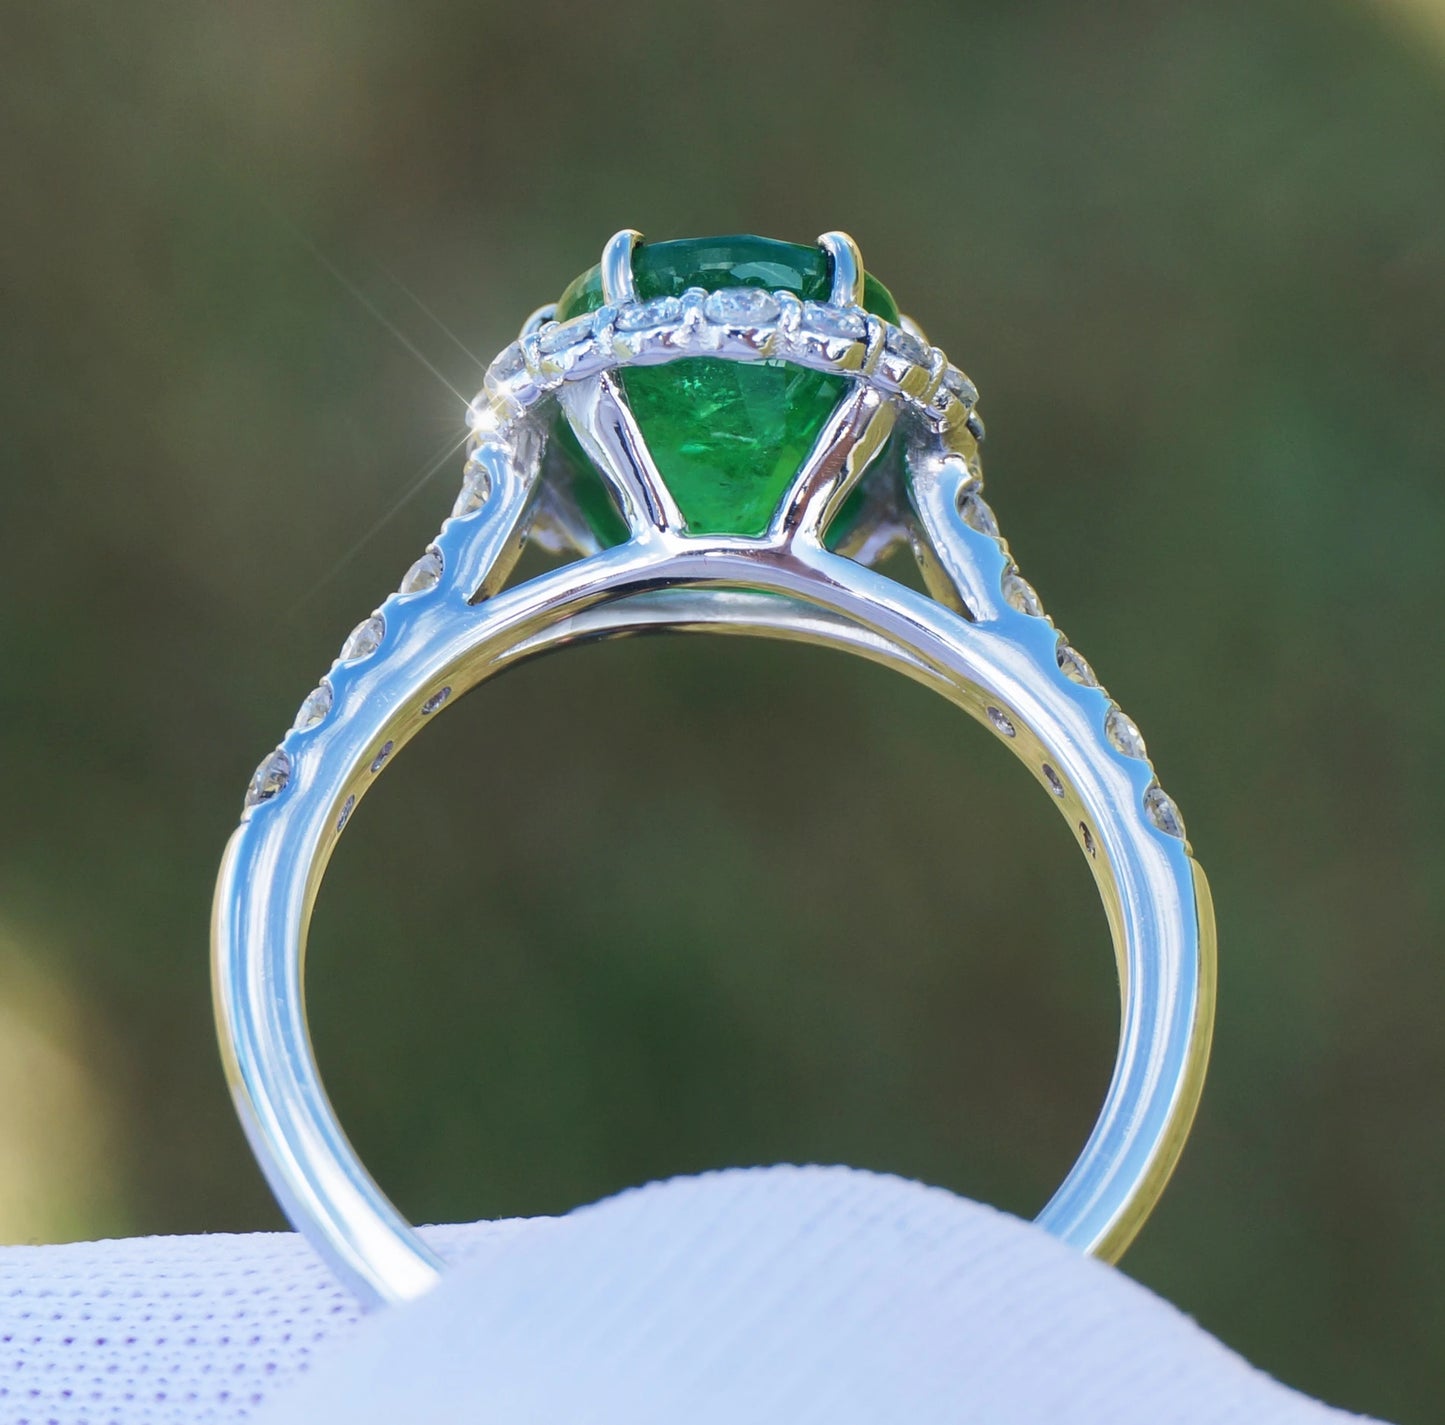 Tsavorite 14k white gold ring diamond green grossular garnet gia certified 4.55ctw